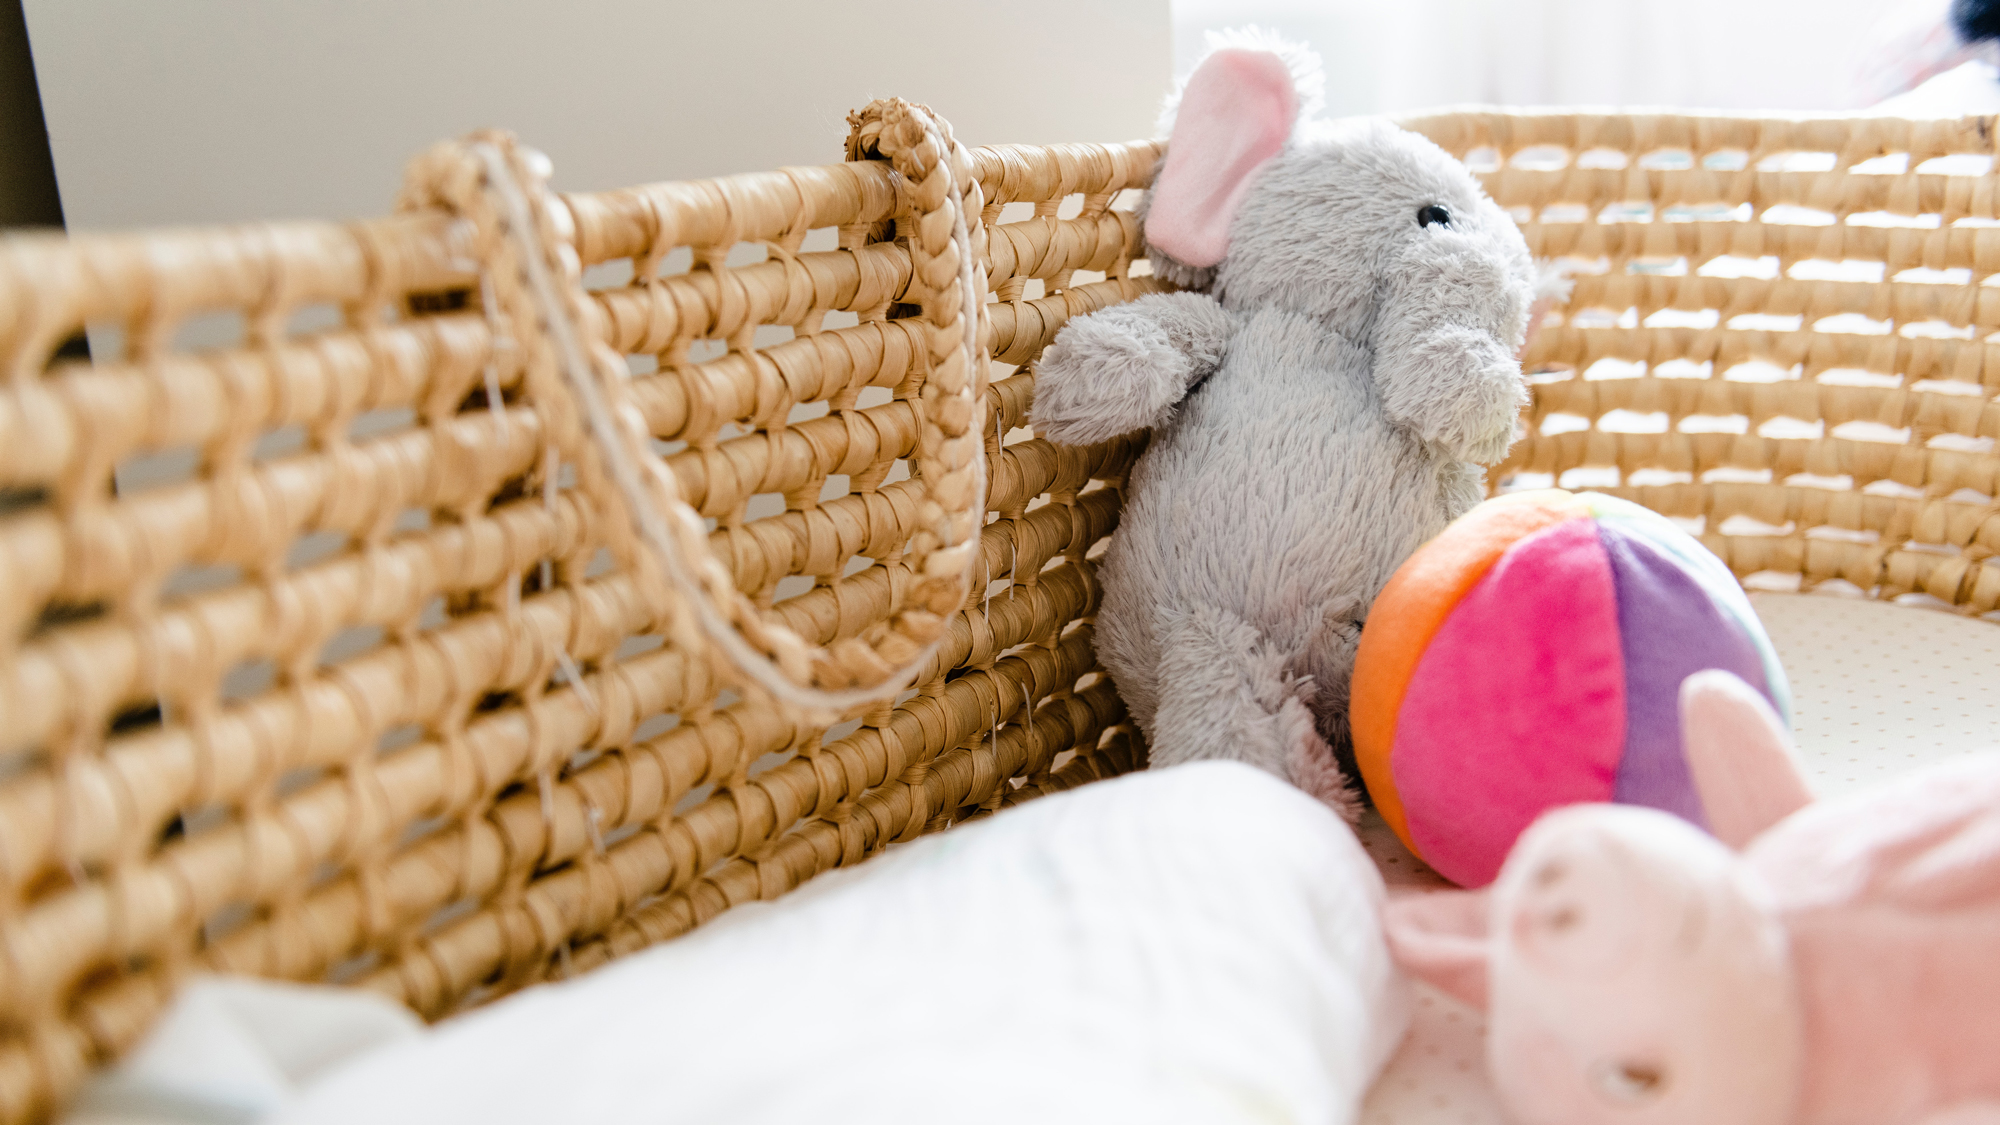 Elephant and ball teddy in wicker basket